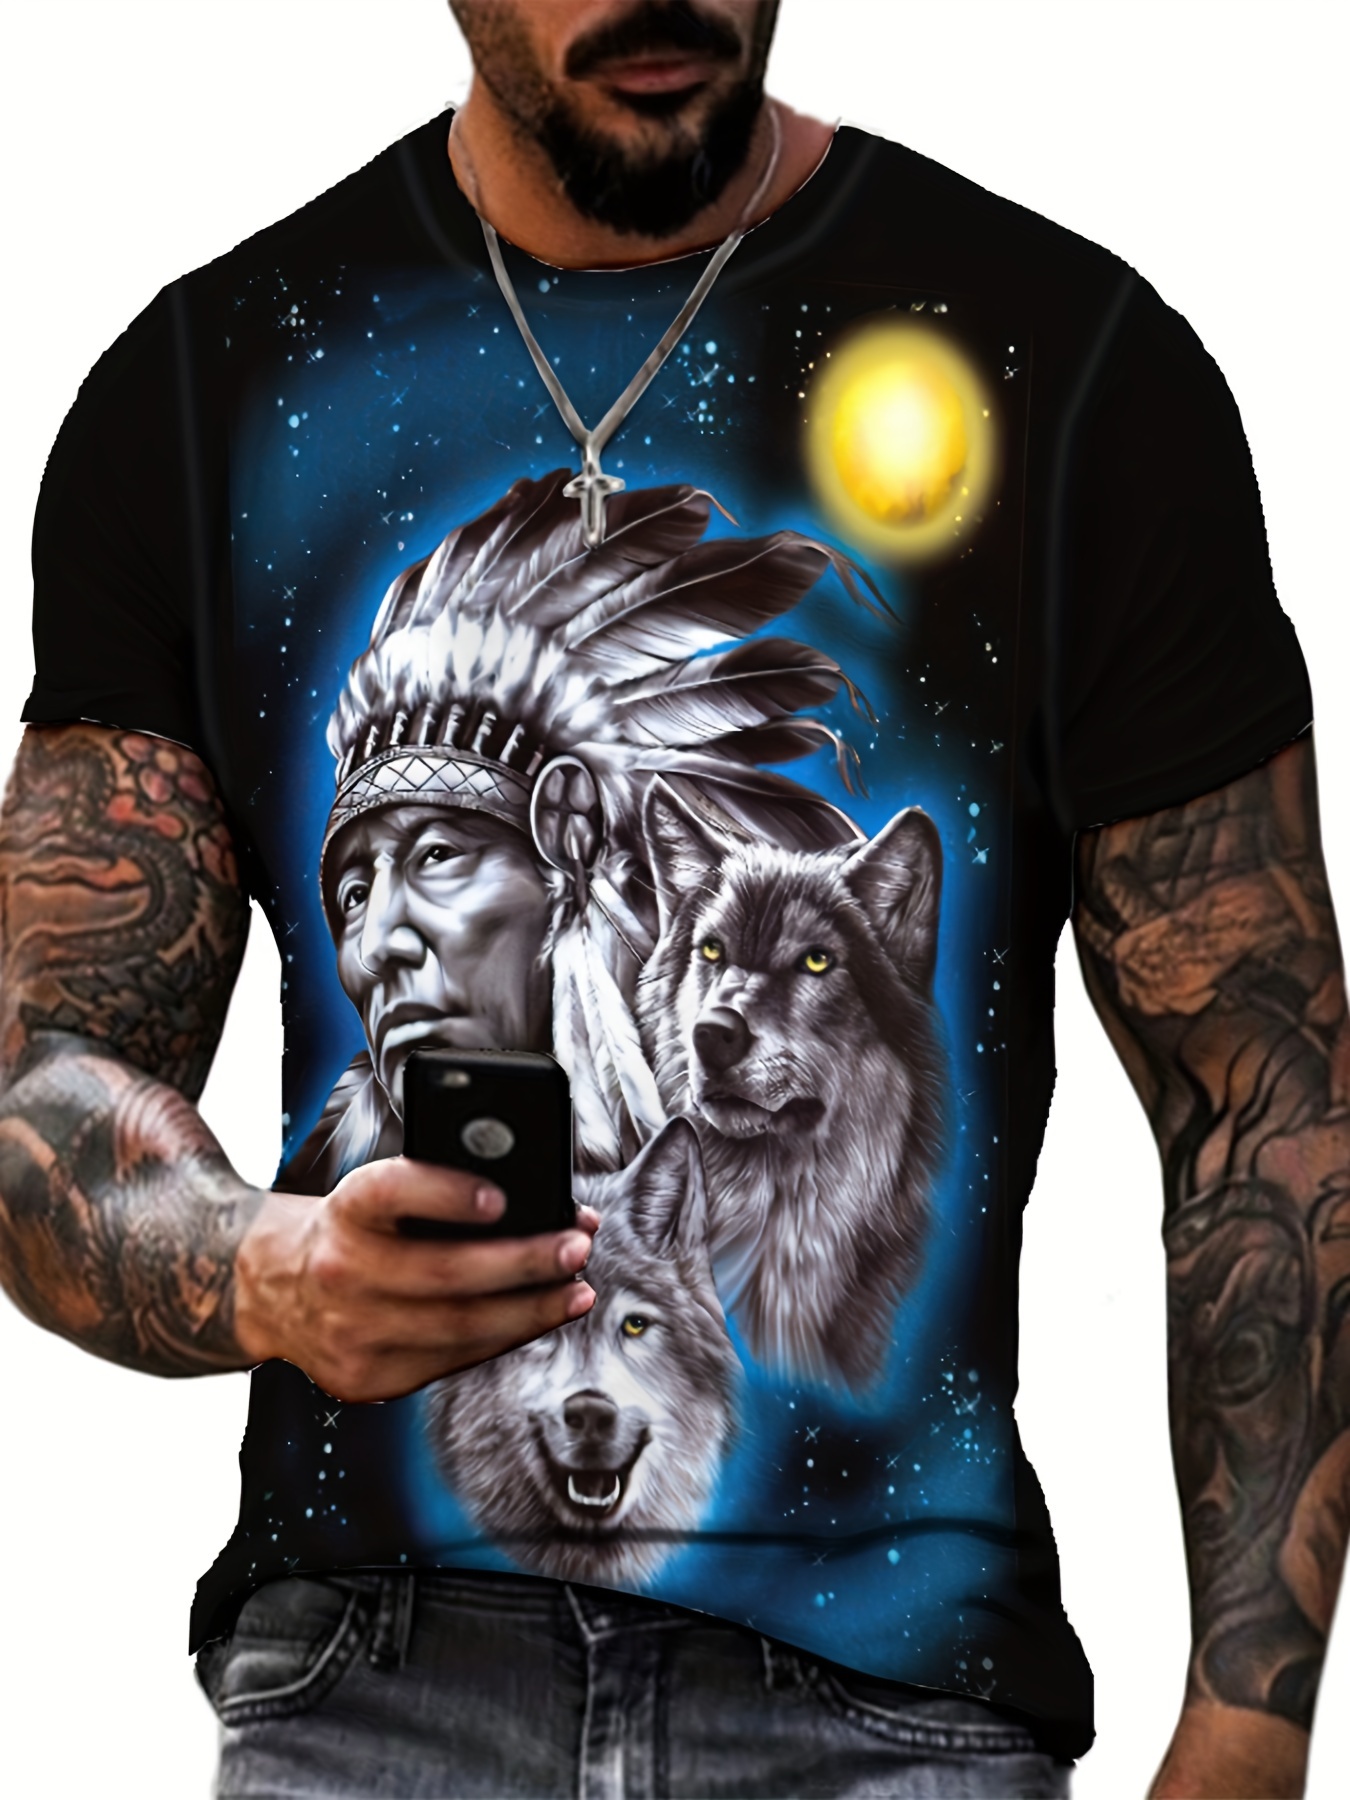 Native shirt